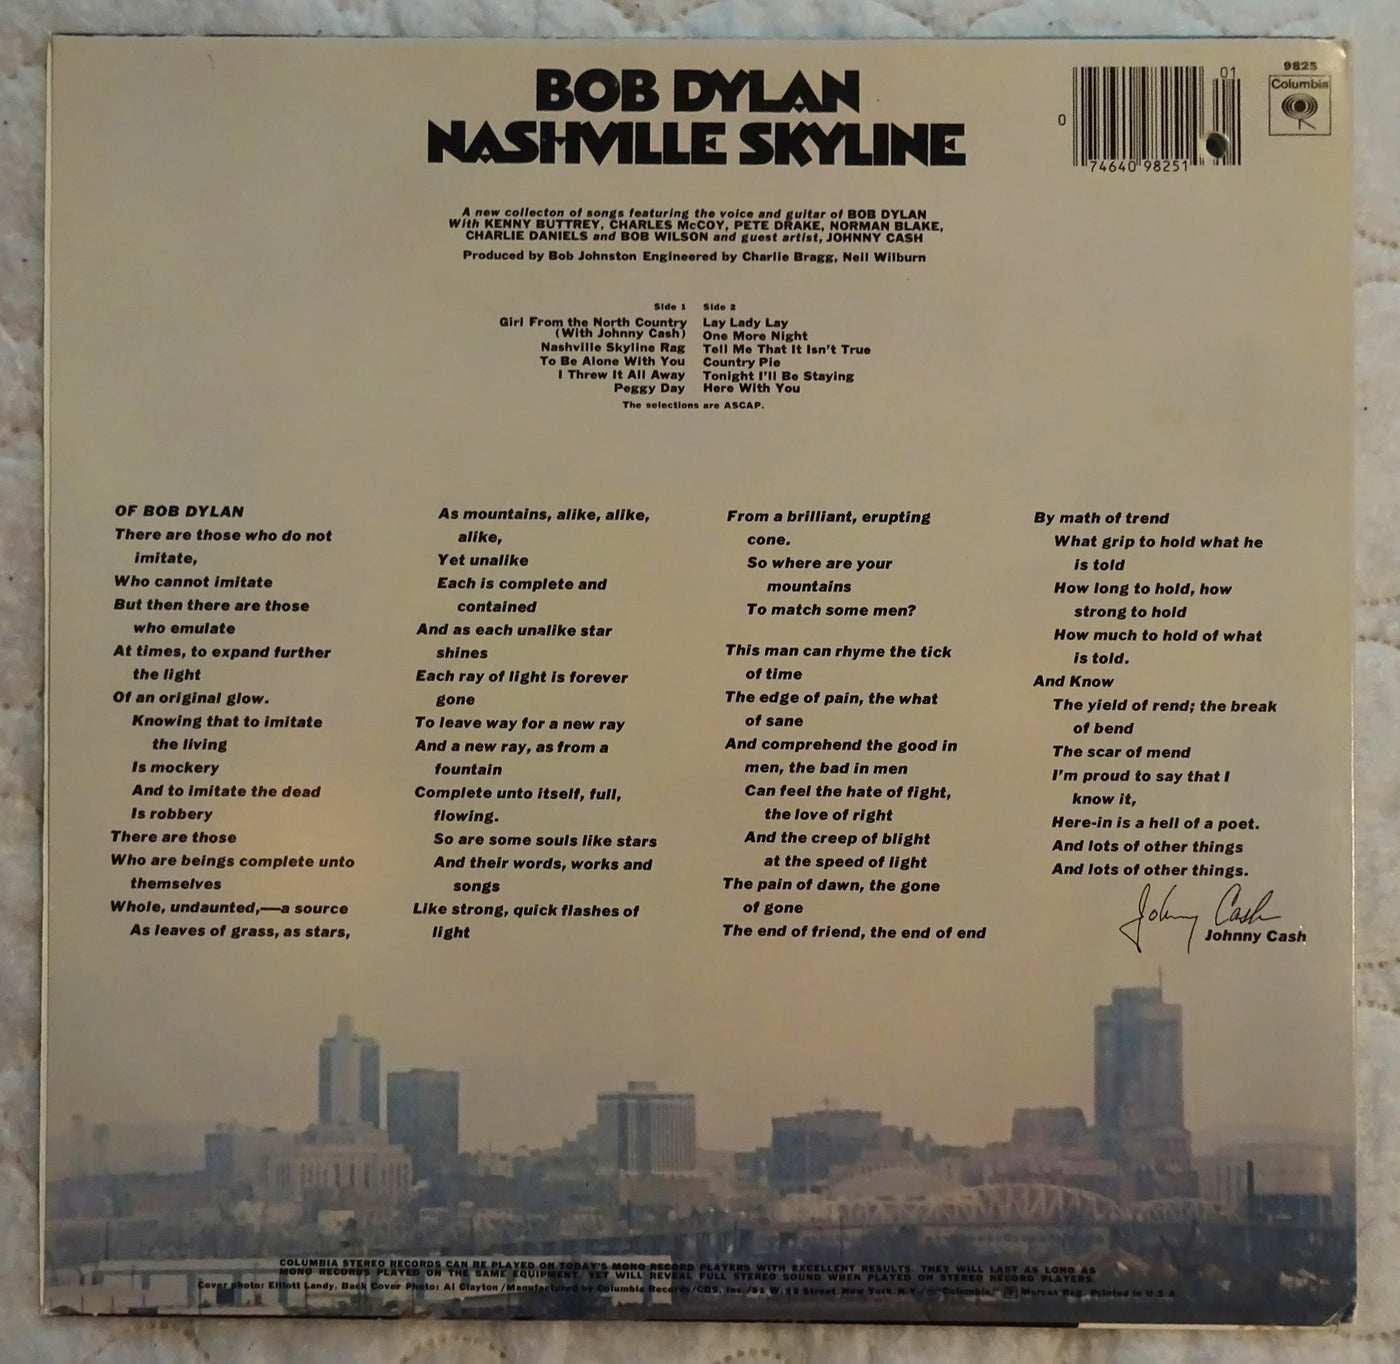 Bob Dylan Nashville Skyline (1969) Vinyl LP 33rpm 9825 Autographed by Bob Dylan